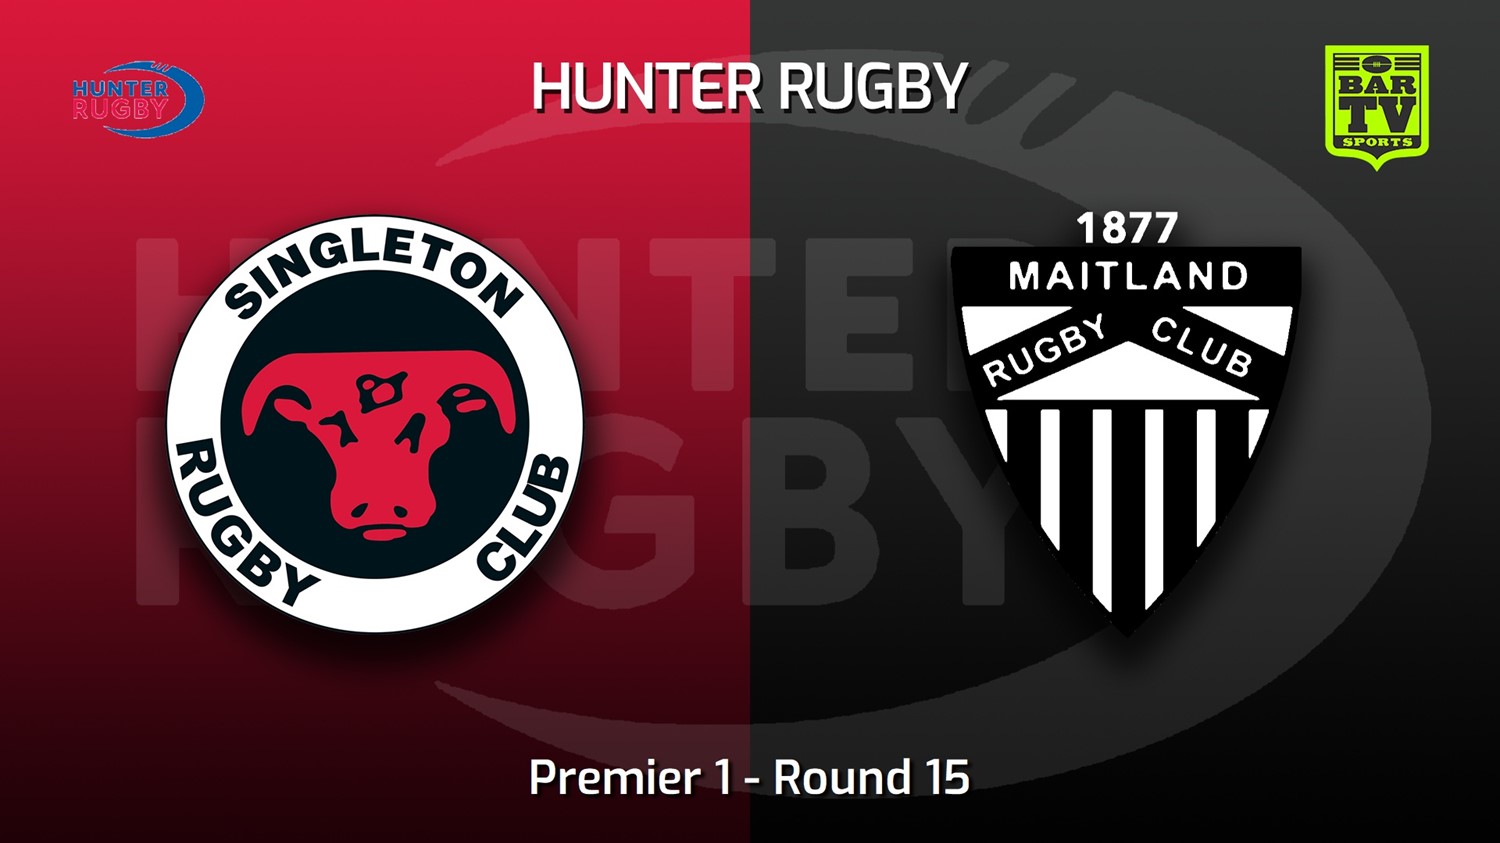 220806-Hunter Rugby Round 15 - Premier 1 - Singleton Bulls v Maitland Slate Image